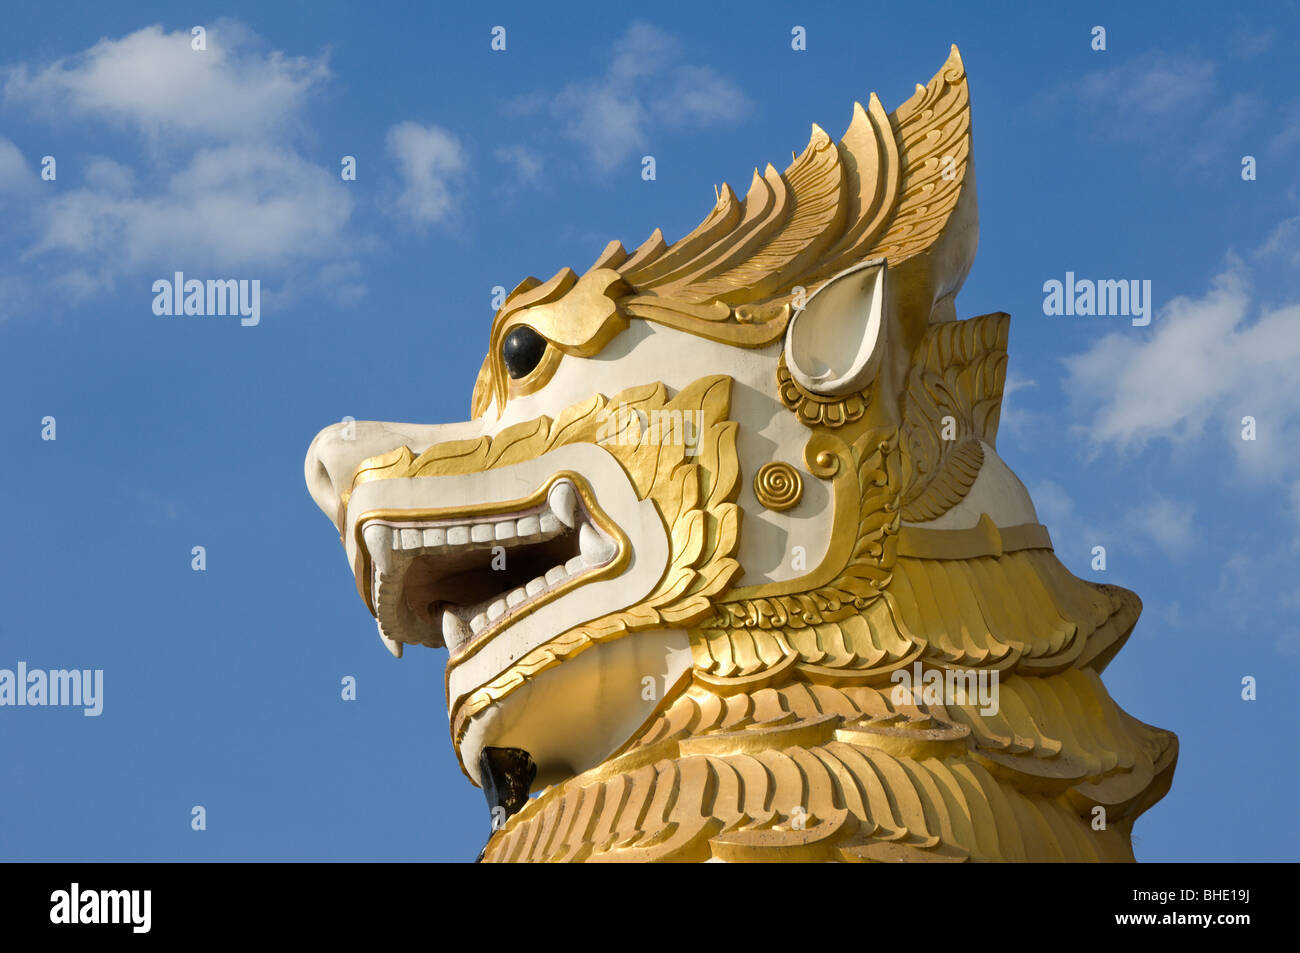 Shwedagon Pagoda, Western entrance, Golden mythical dragon, Rangoon, Yangon; Burma, Myanmar Stock Photo